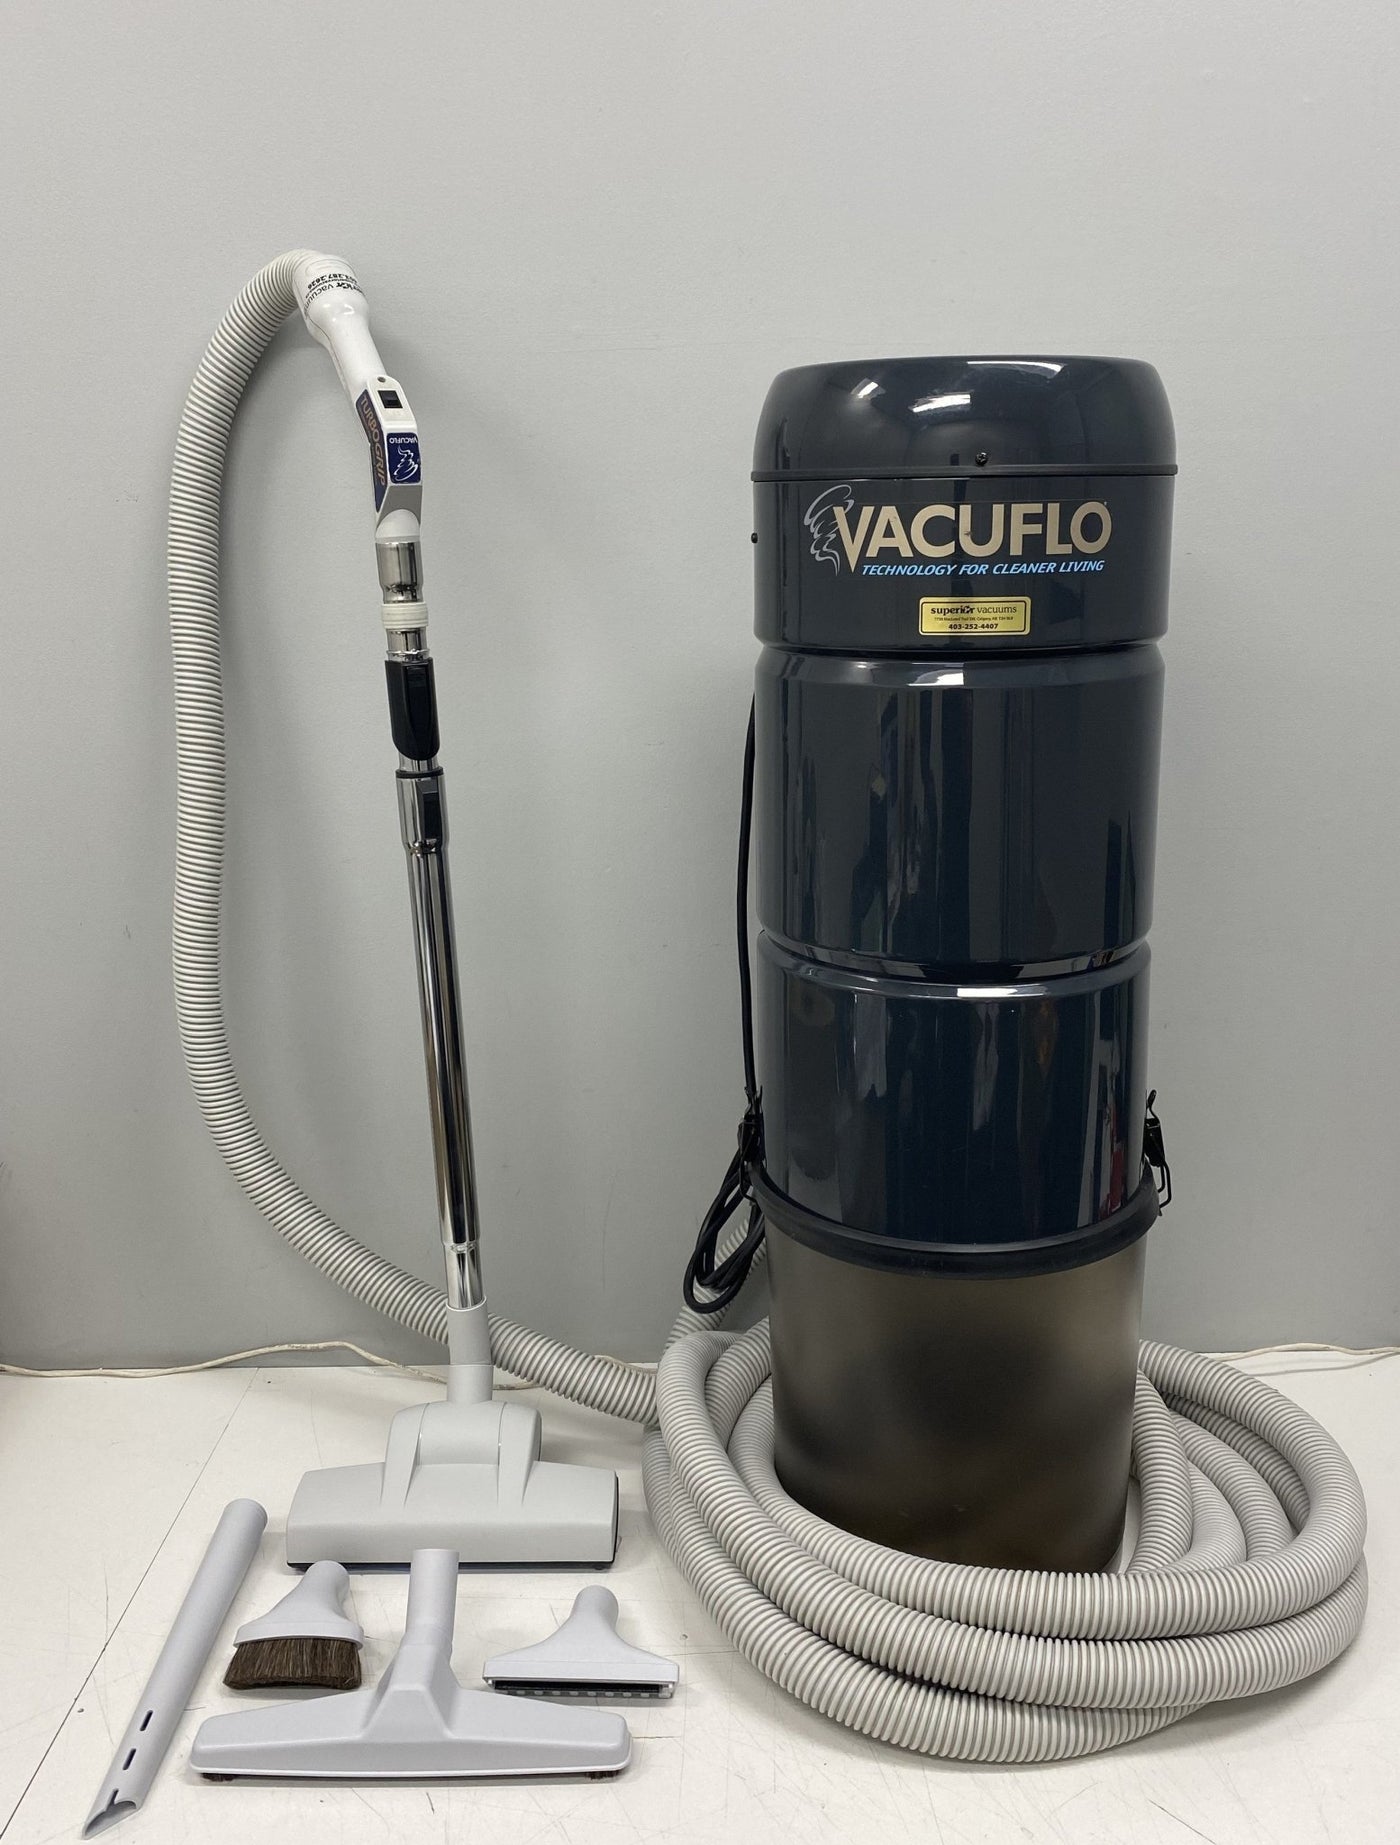 Vacuflo 566Q True Cyclonic Central Vacuum - Long-lasting Cleaning Performance